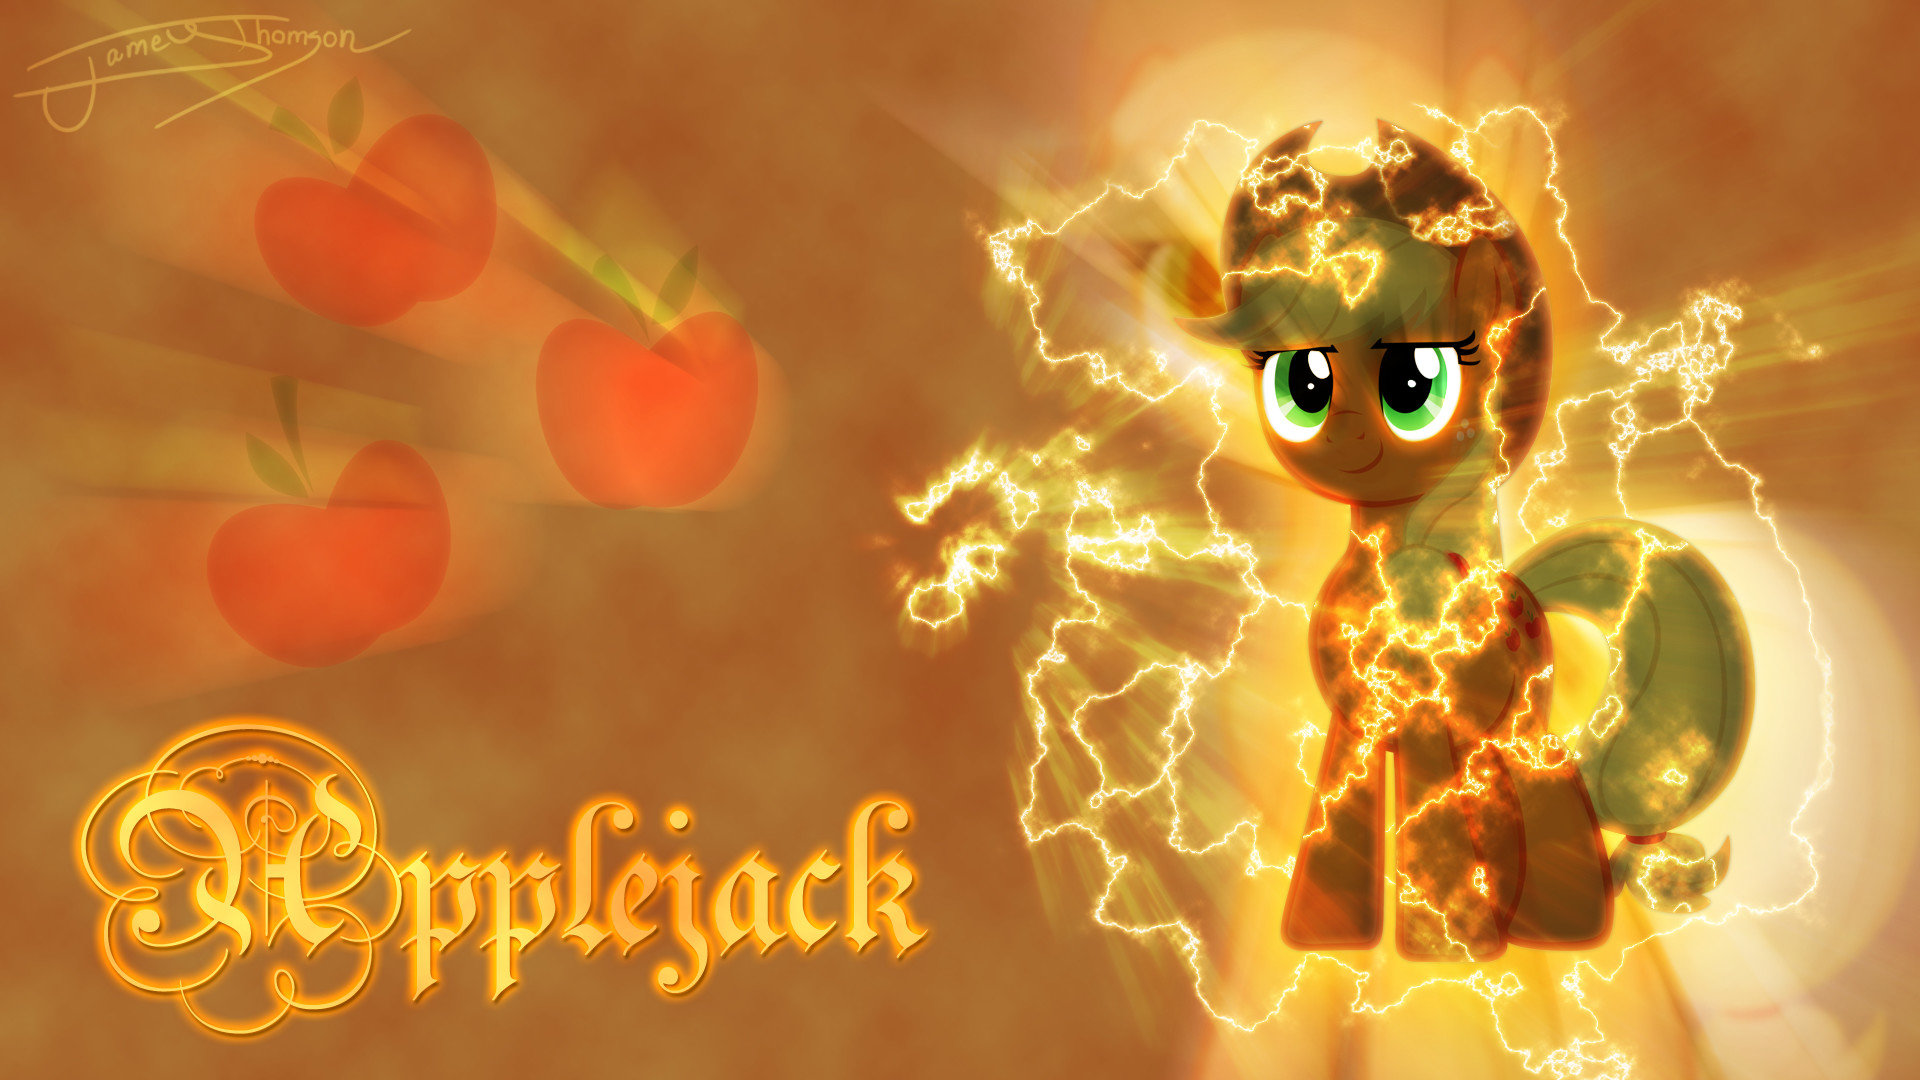 High resolution Applejack (My Little Pony) 1080p wallpaper ID:154623 for desktop